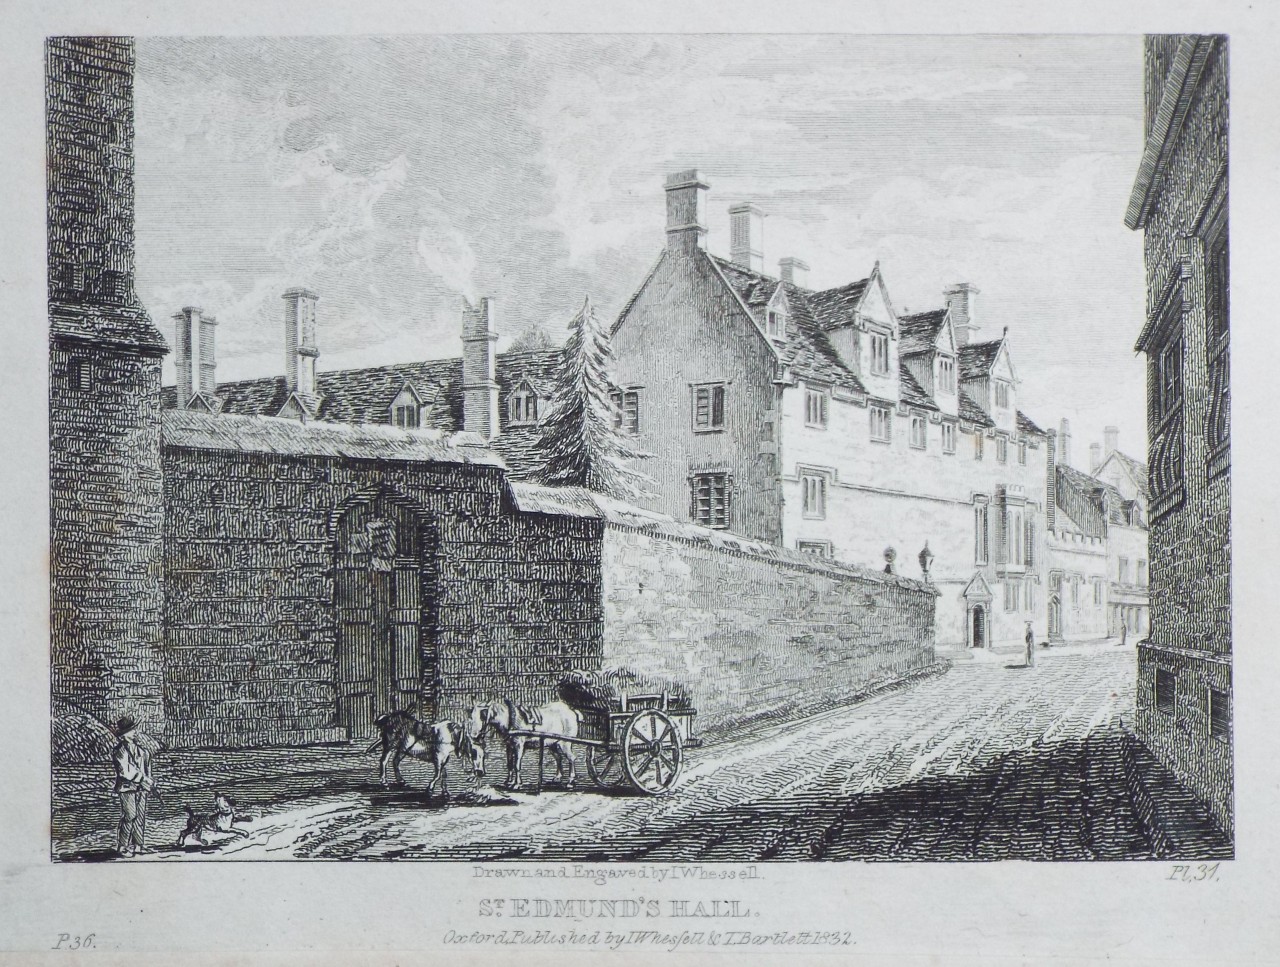 Print - St. Edmund's Hall. - Whessell